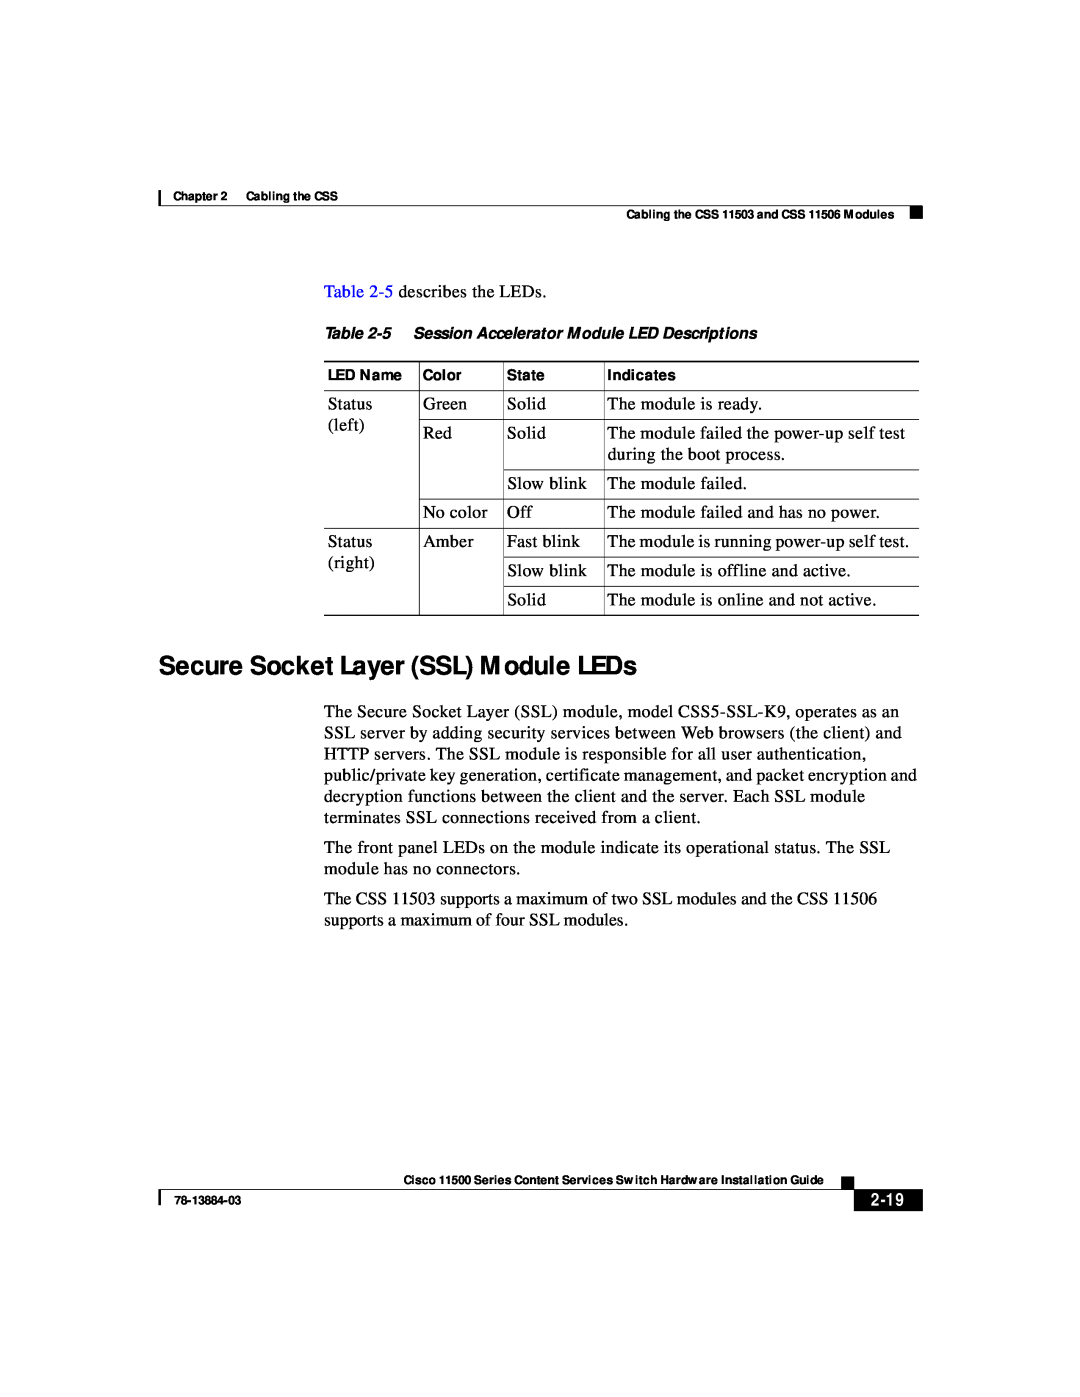 Cisco Systems 11500 Series manual Secure Socket Layer SSL Module LEDs, 2-19, 5 Session Accelerator Module LED Descriptions 